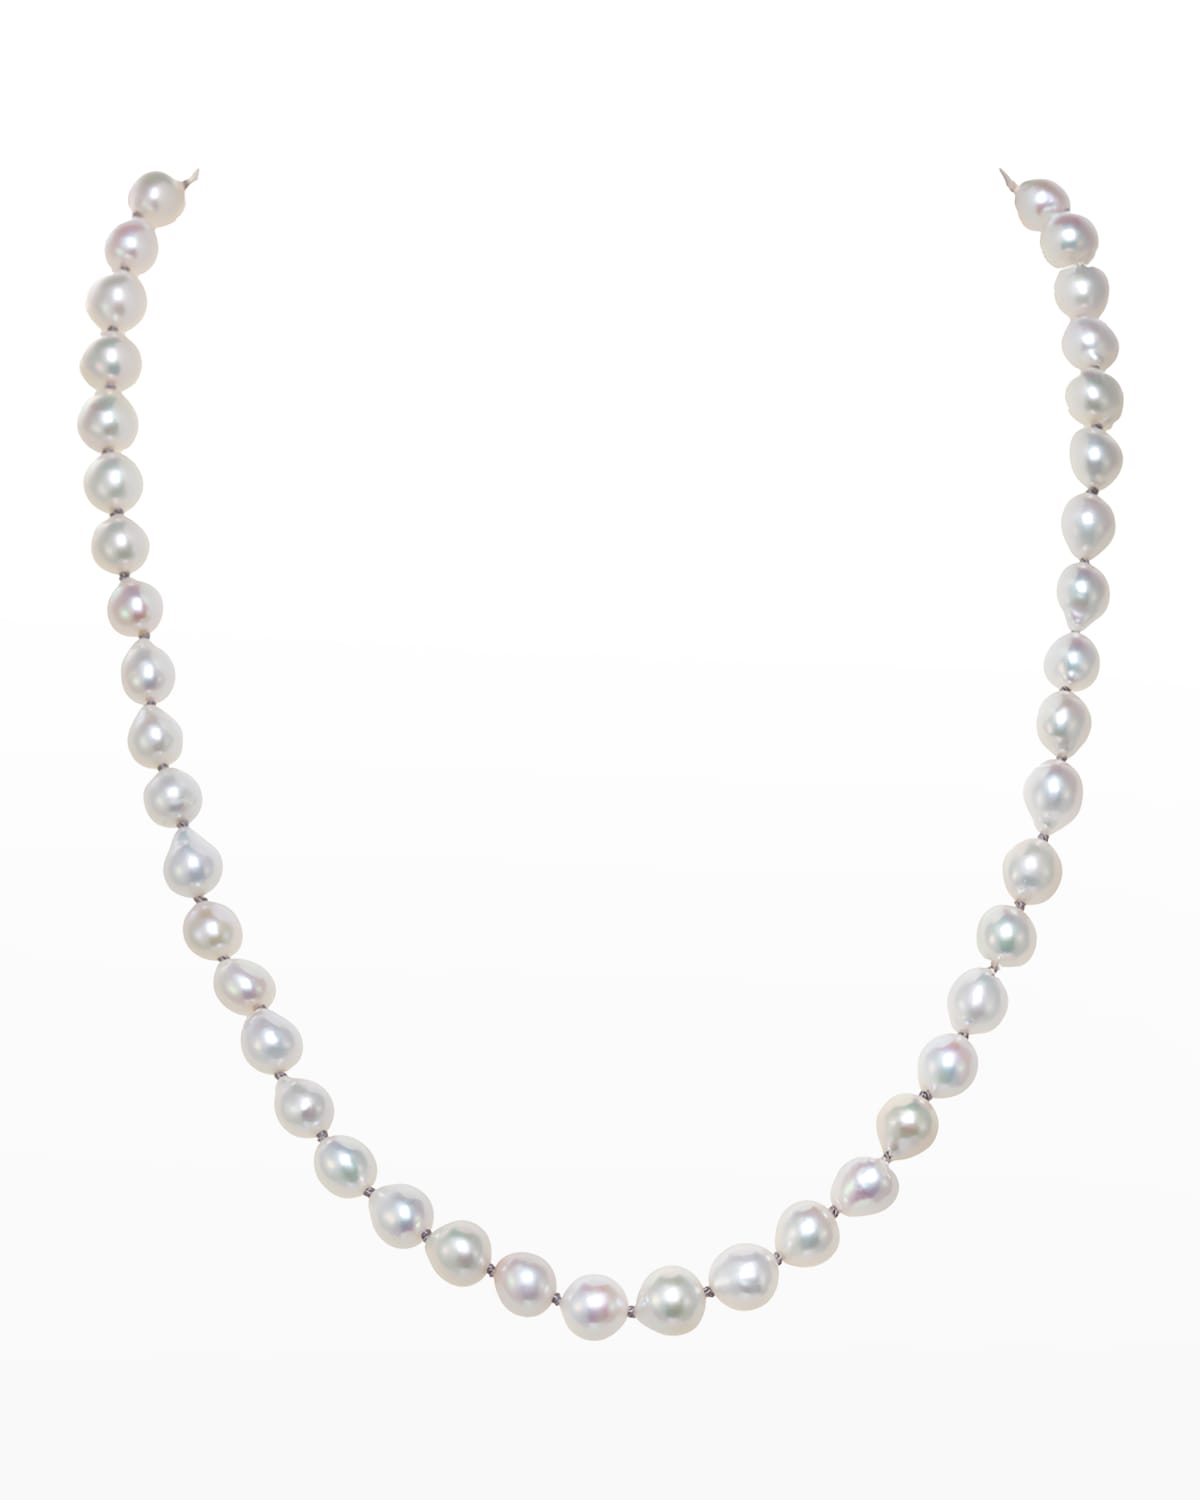 Petite White Baroque Pearl Necklace, 7-8 mm, 18"L